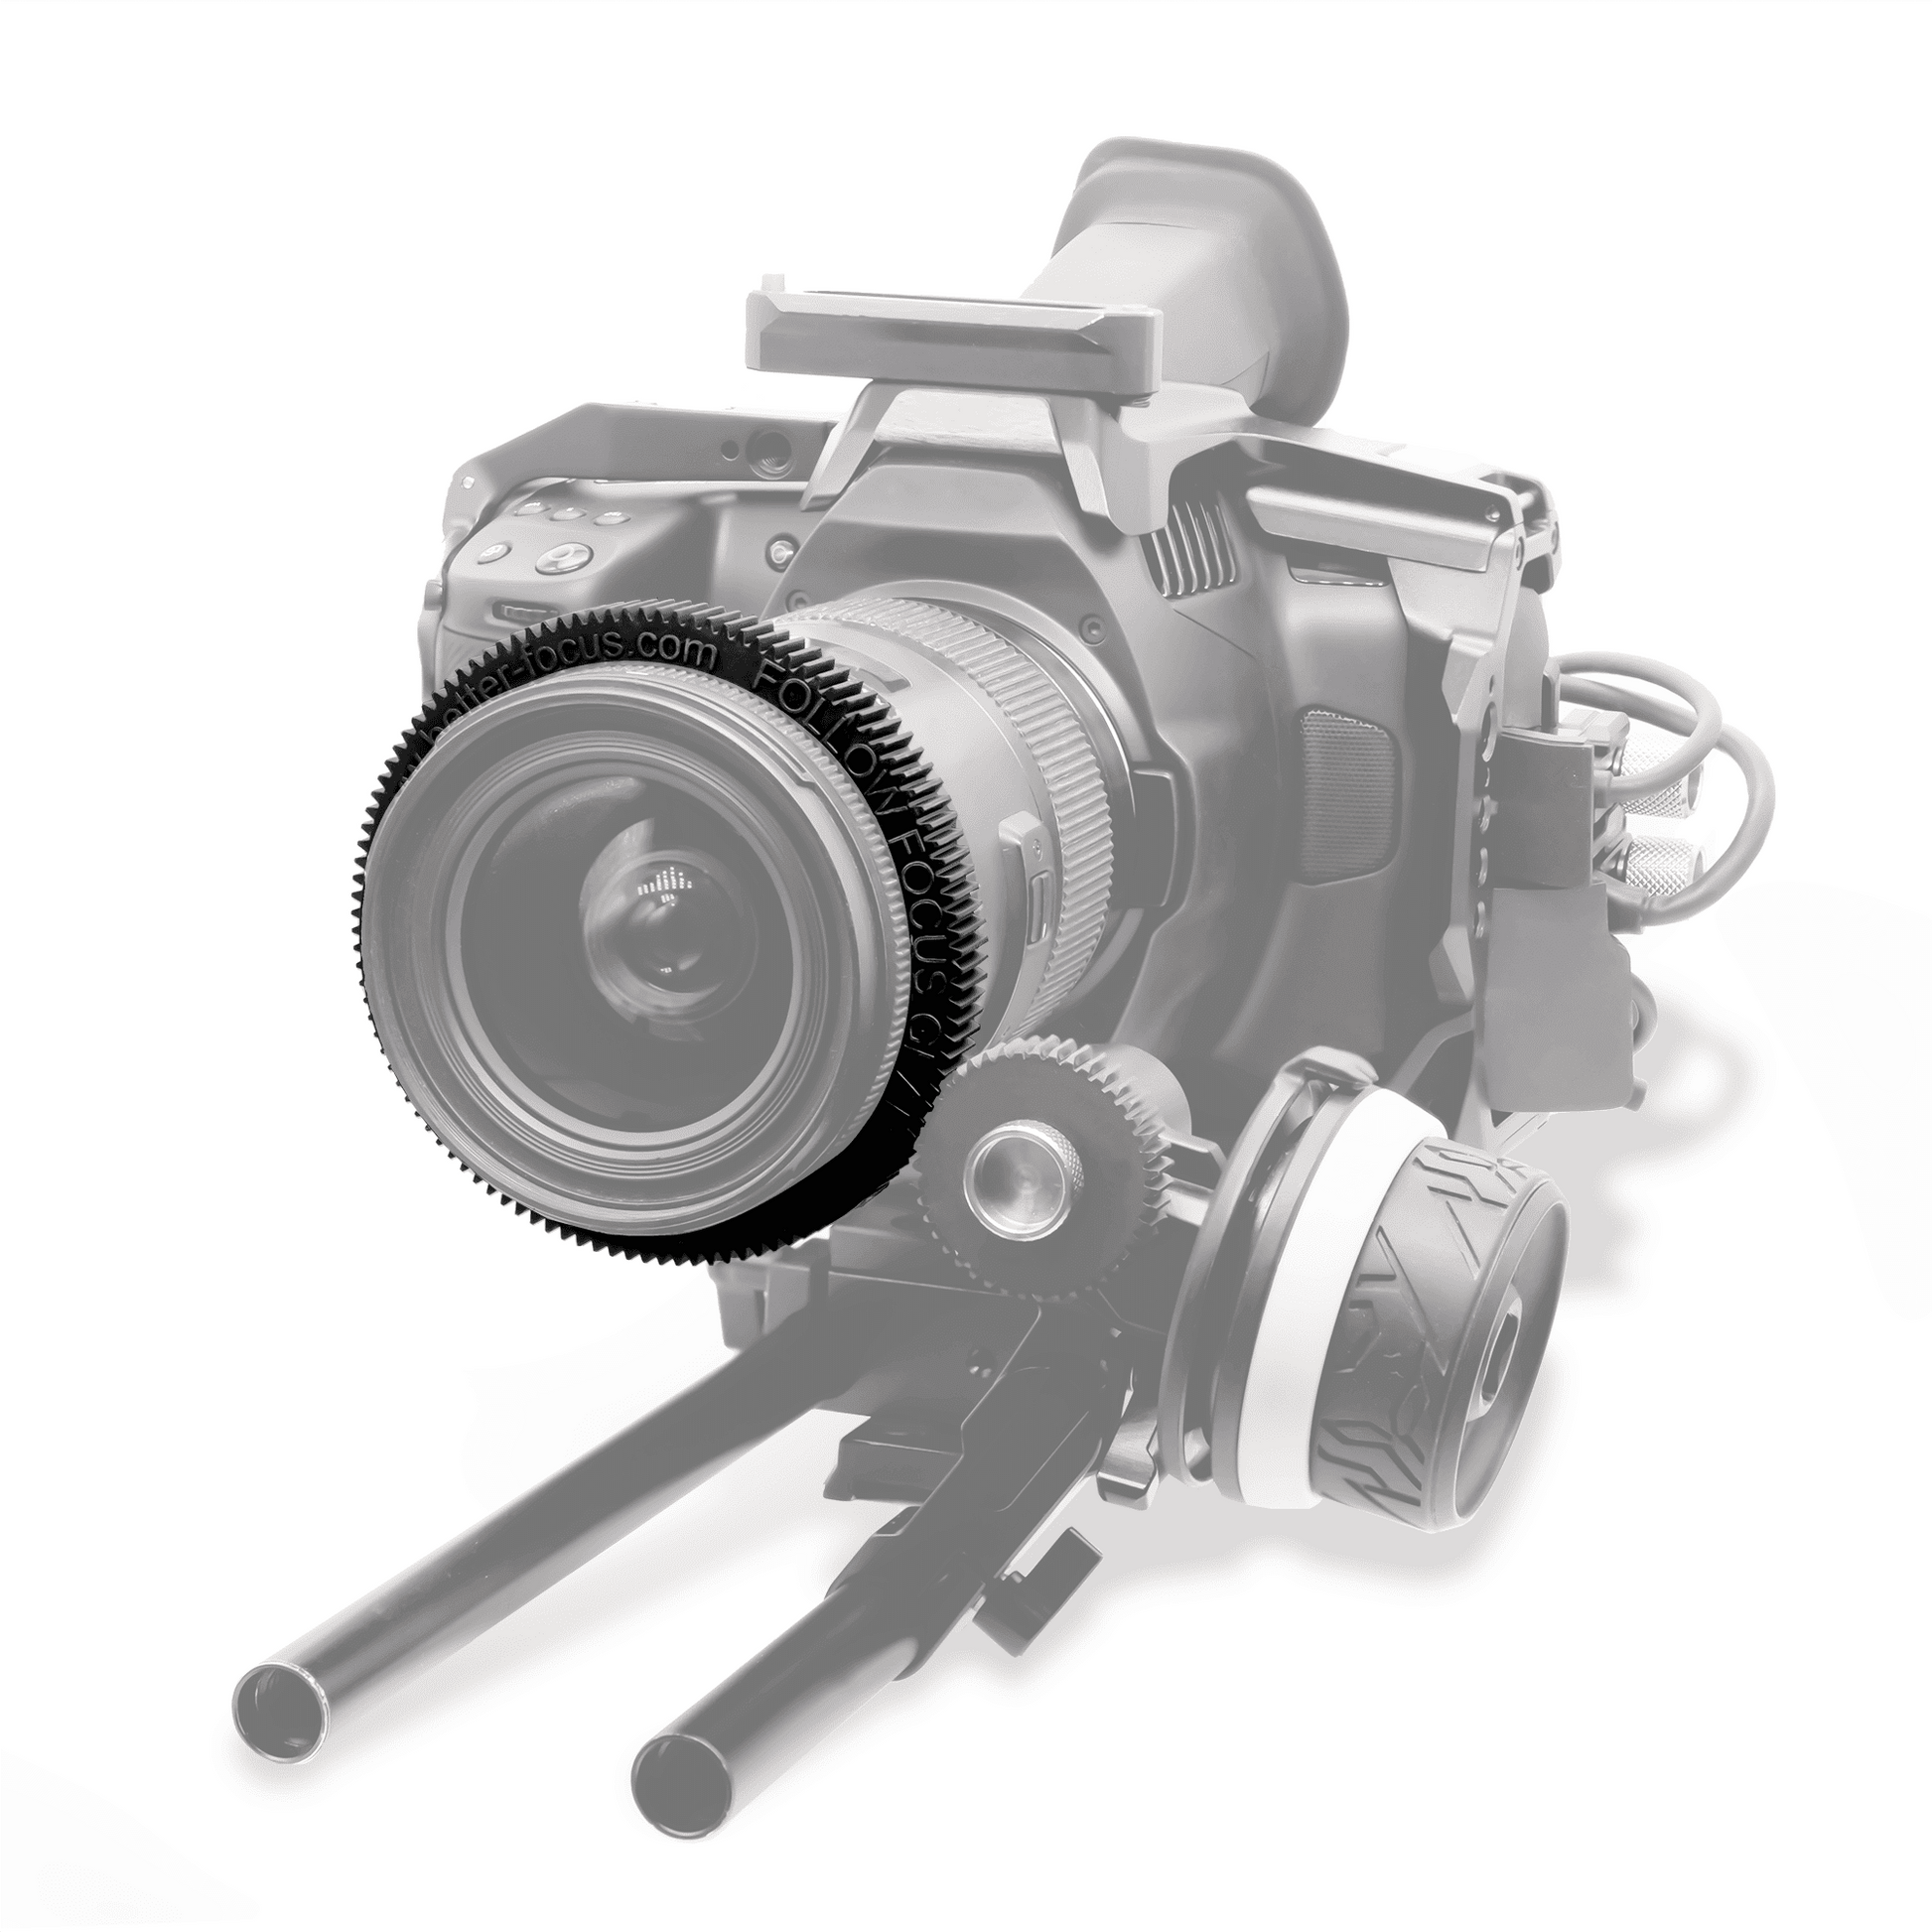 Follow Focus Gear for Fujifilm FUJINON GF 30mm F/5.6 T/S lens